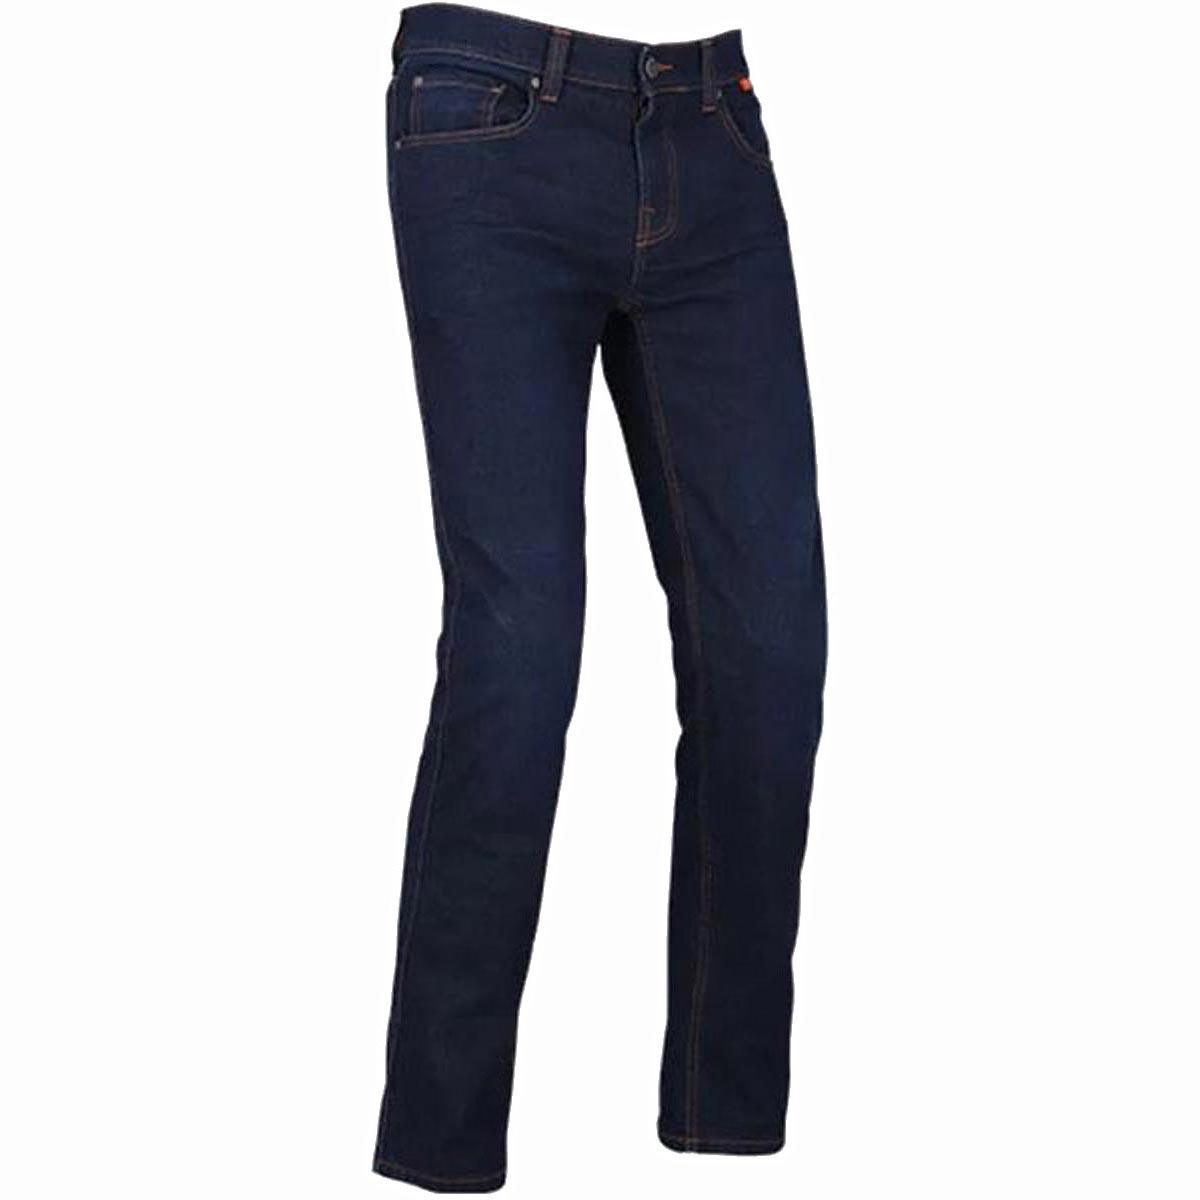 Richa Original 2 Straight Cut Jeans Navy 32in Leg 44in Waist